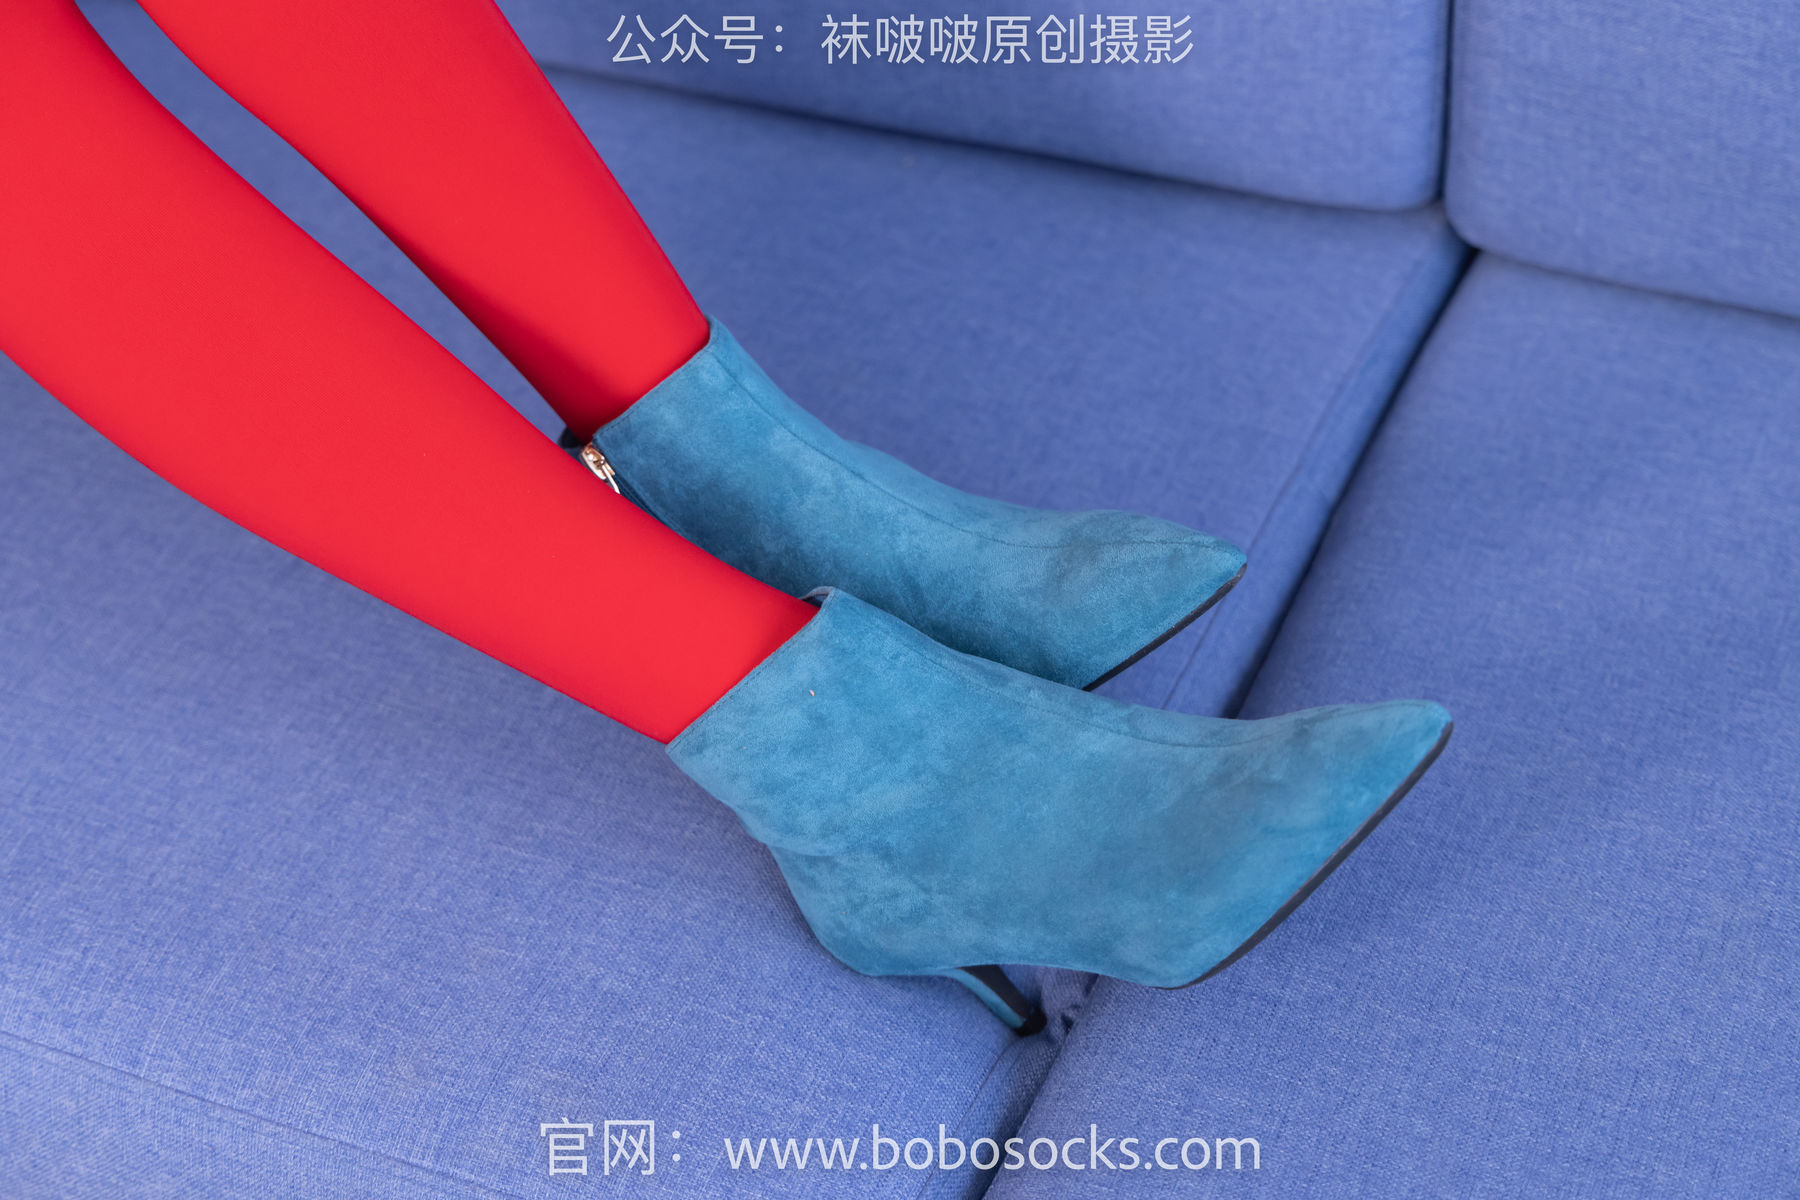 BoBoSocks袜啵啵 No.132 小甜豆-aj1板鞋、蓝色短靴、厚黑丝、厚红丝/(145P)